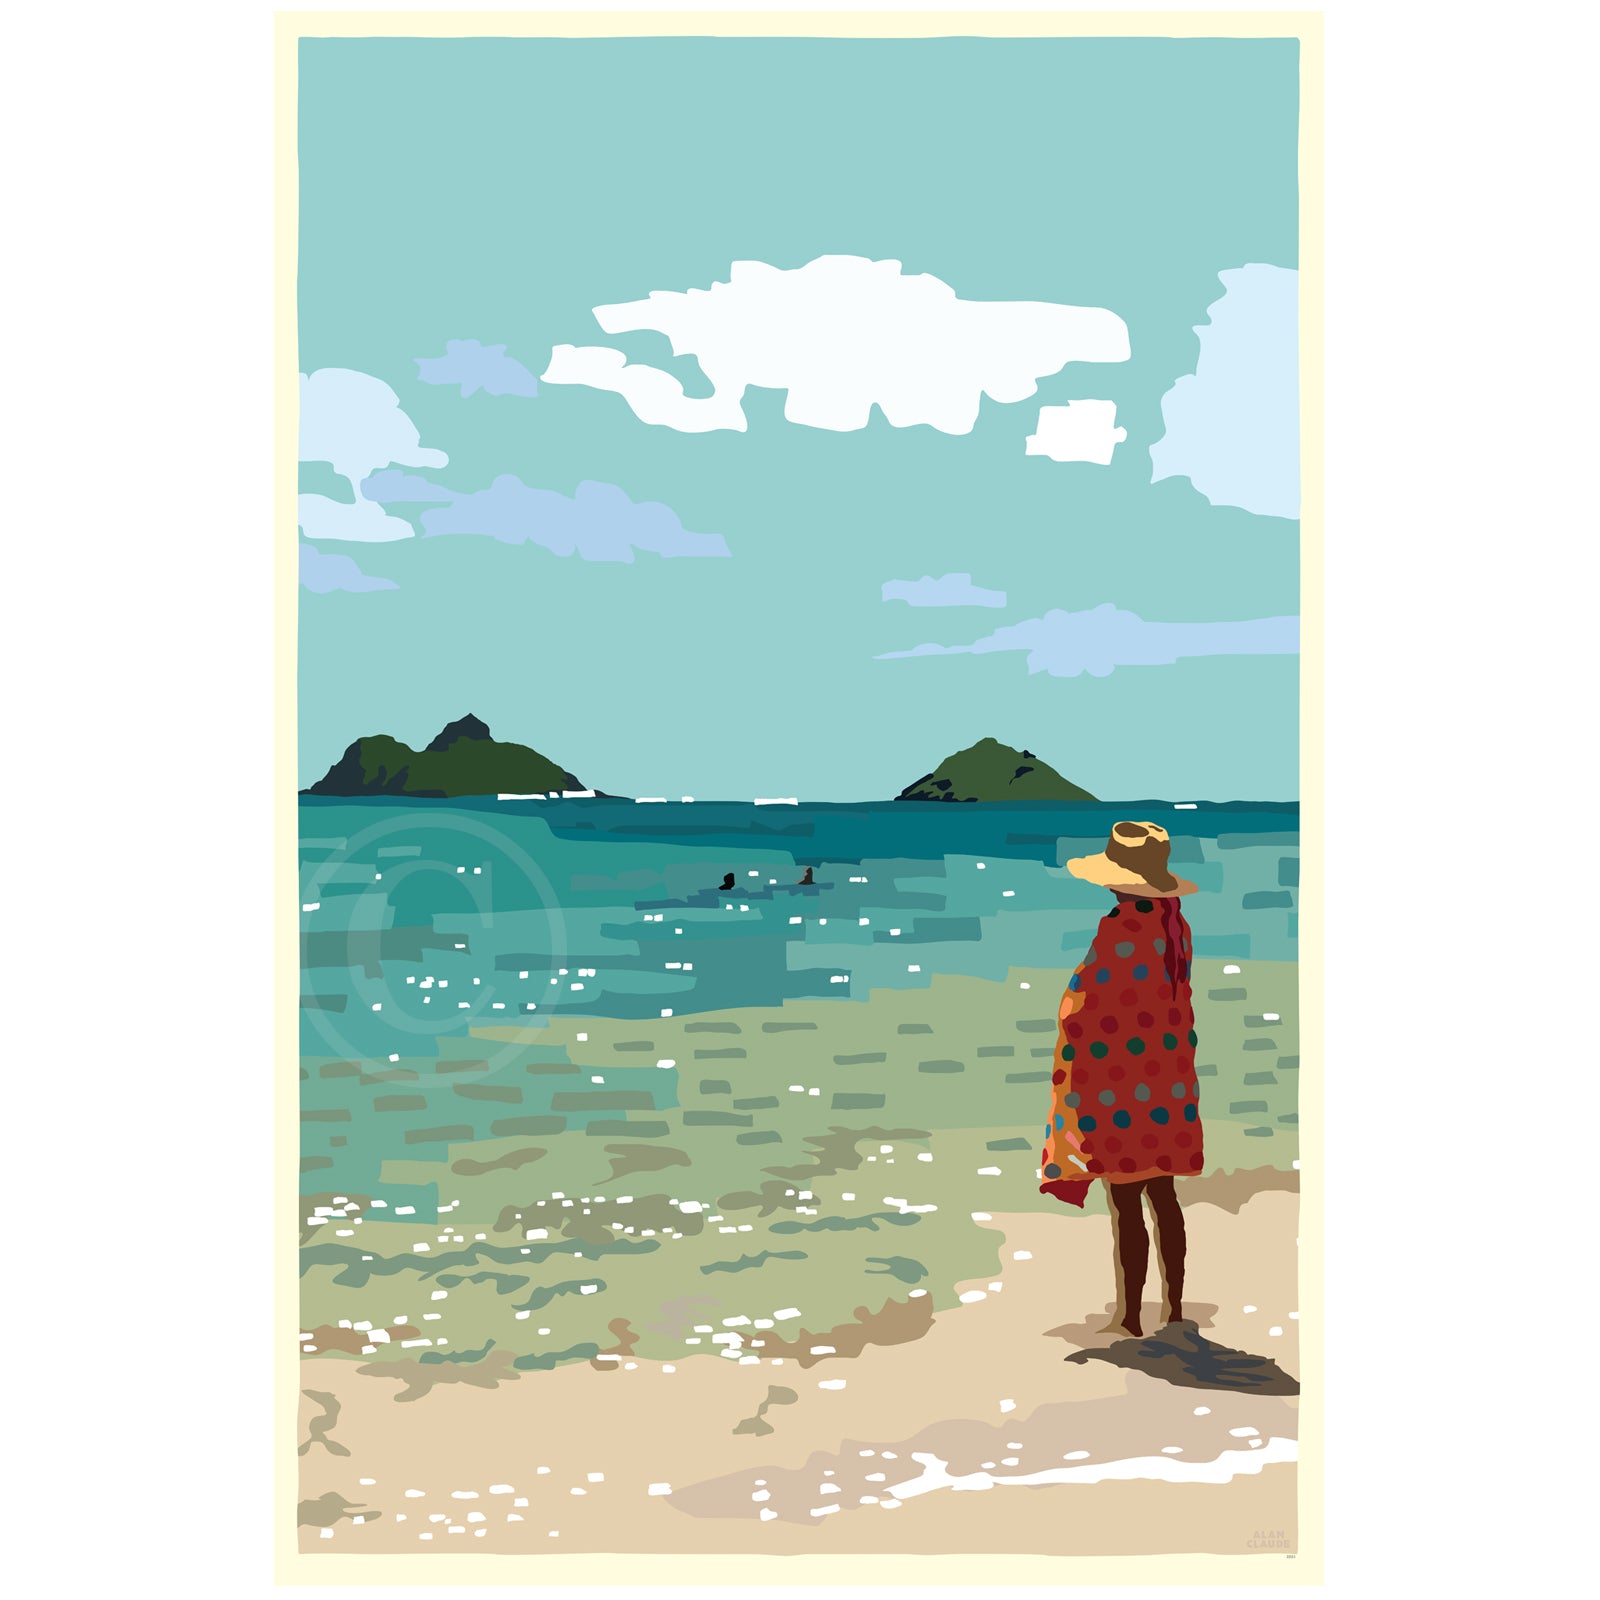 Twin Island Peace Art Print 24" x 36" Travel Poster By Alan Claude - Hawaii